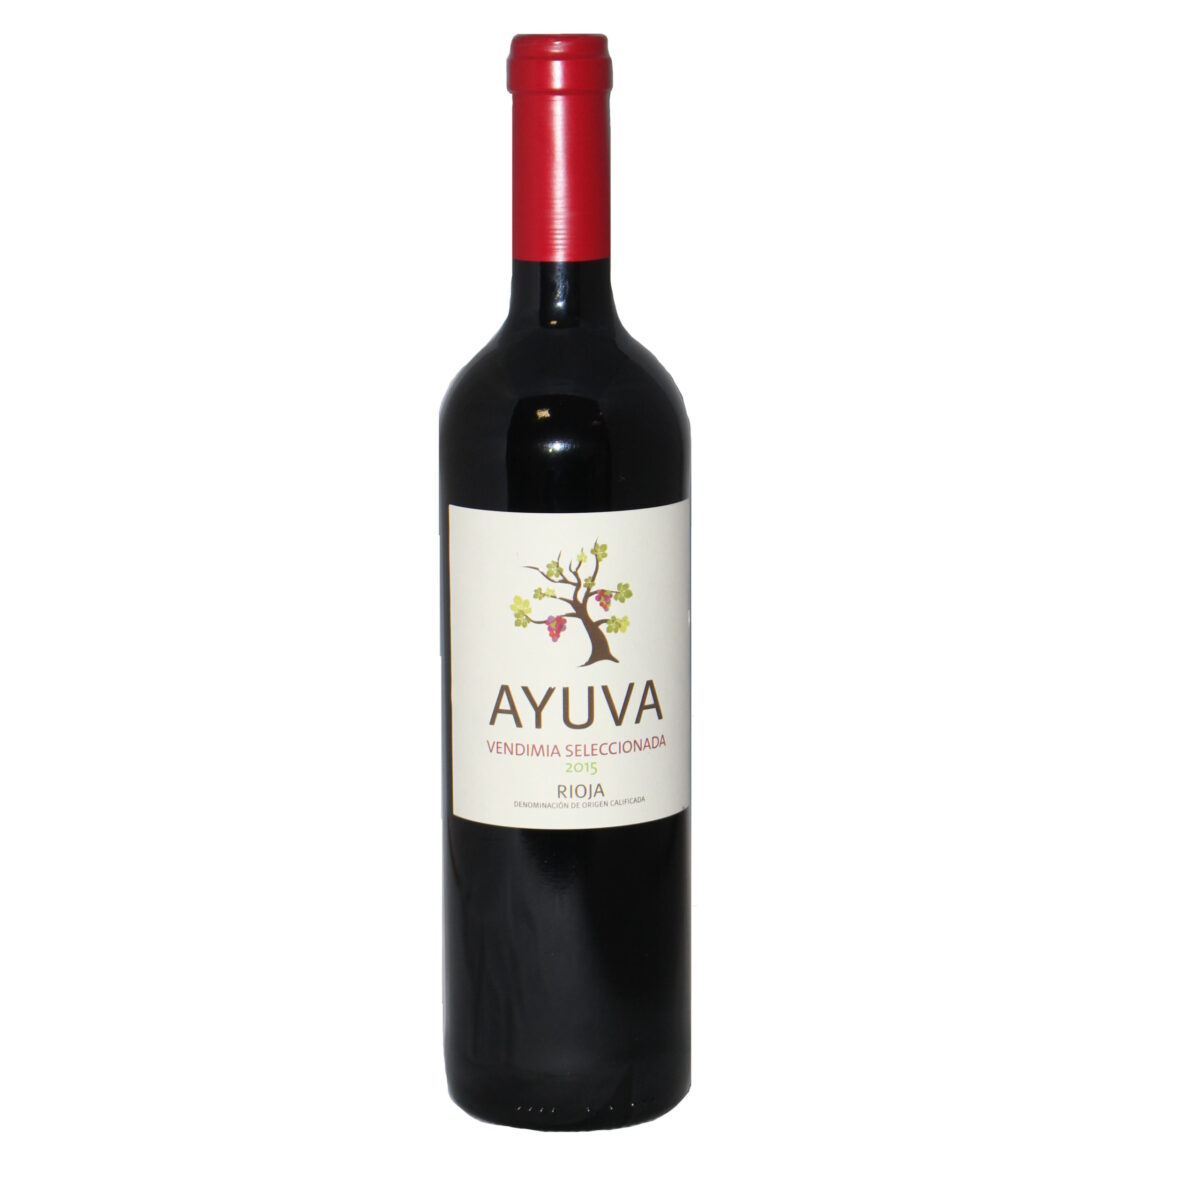 Ayuva Selected Harvest DOC Rioja